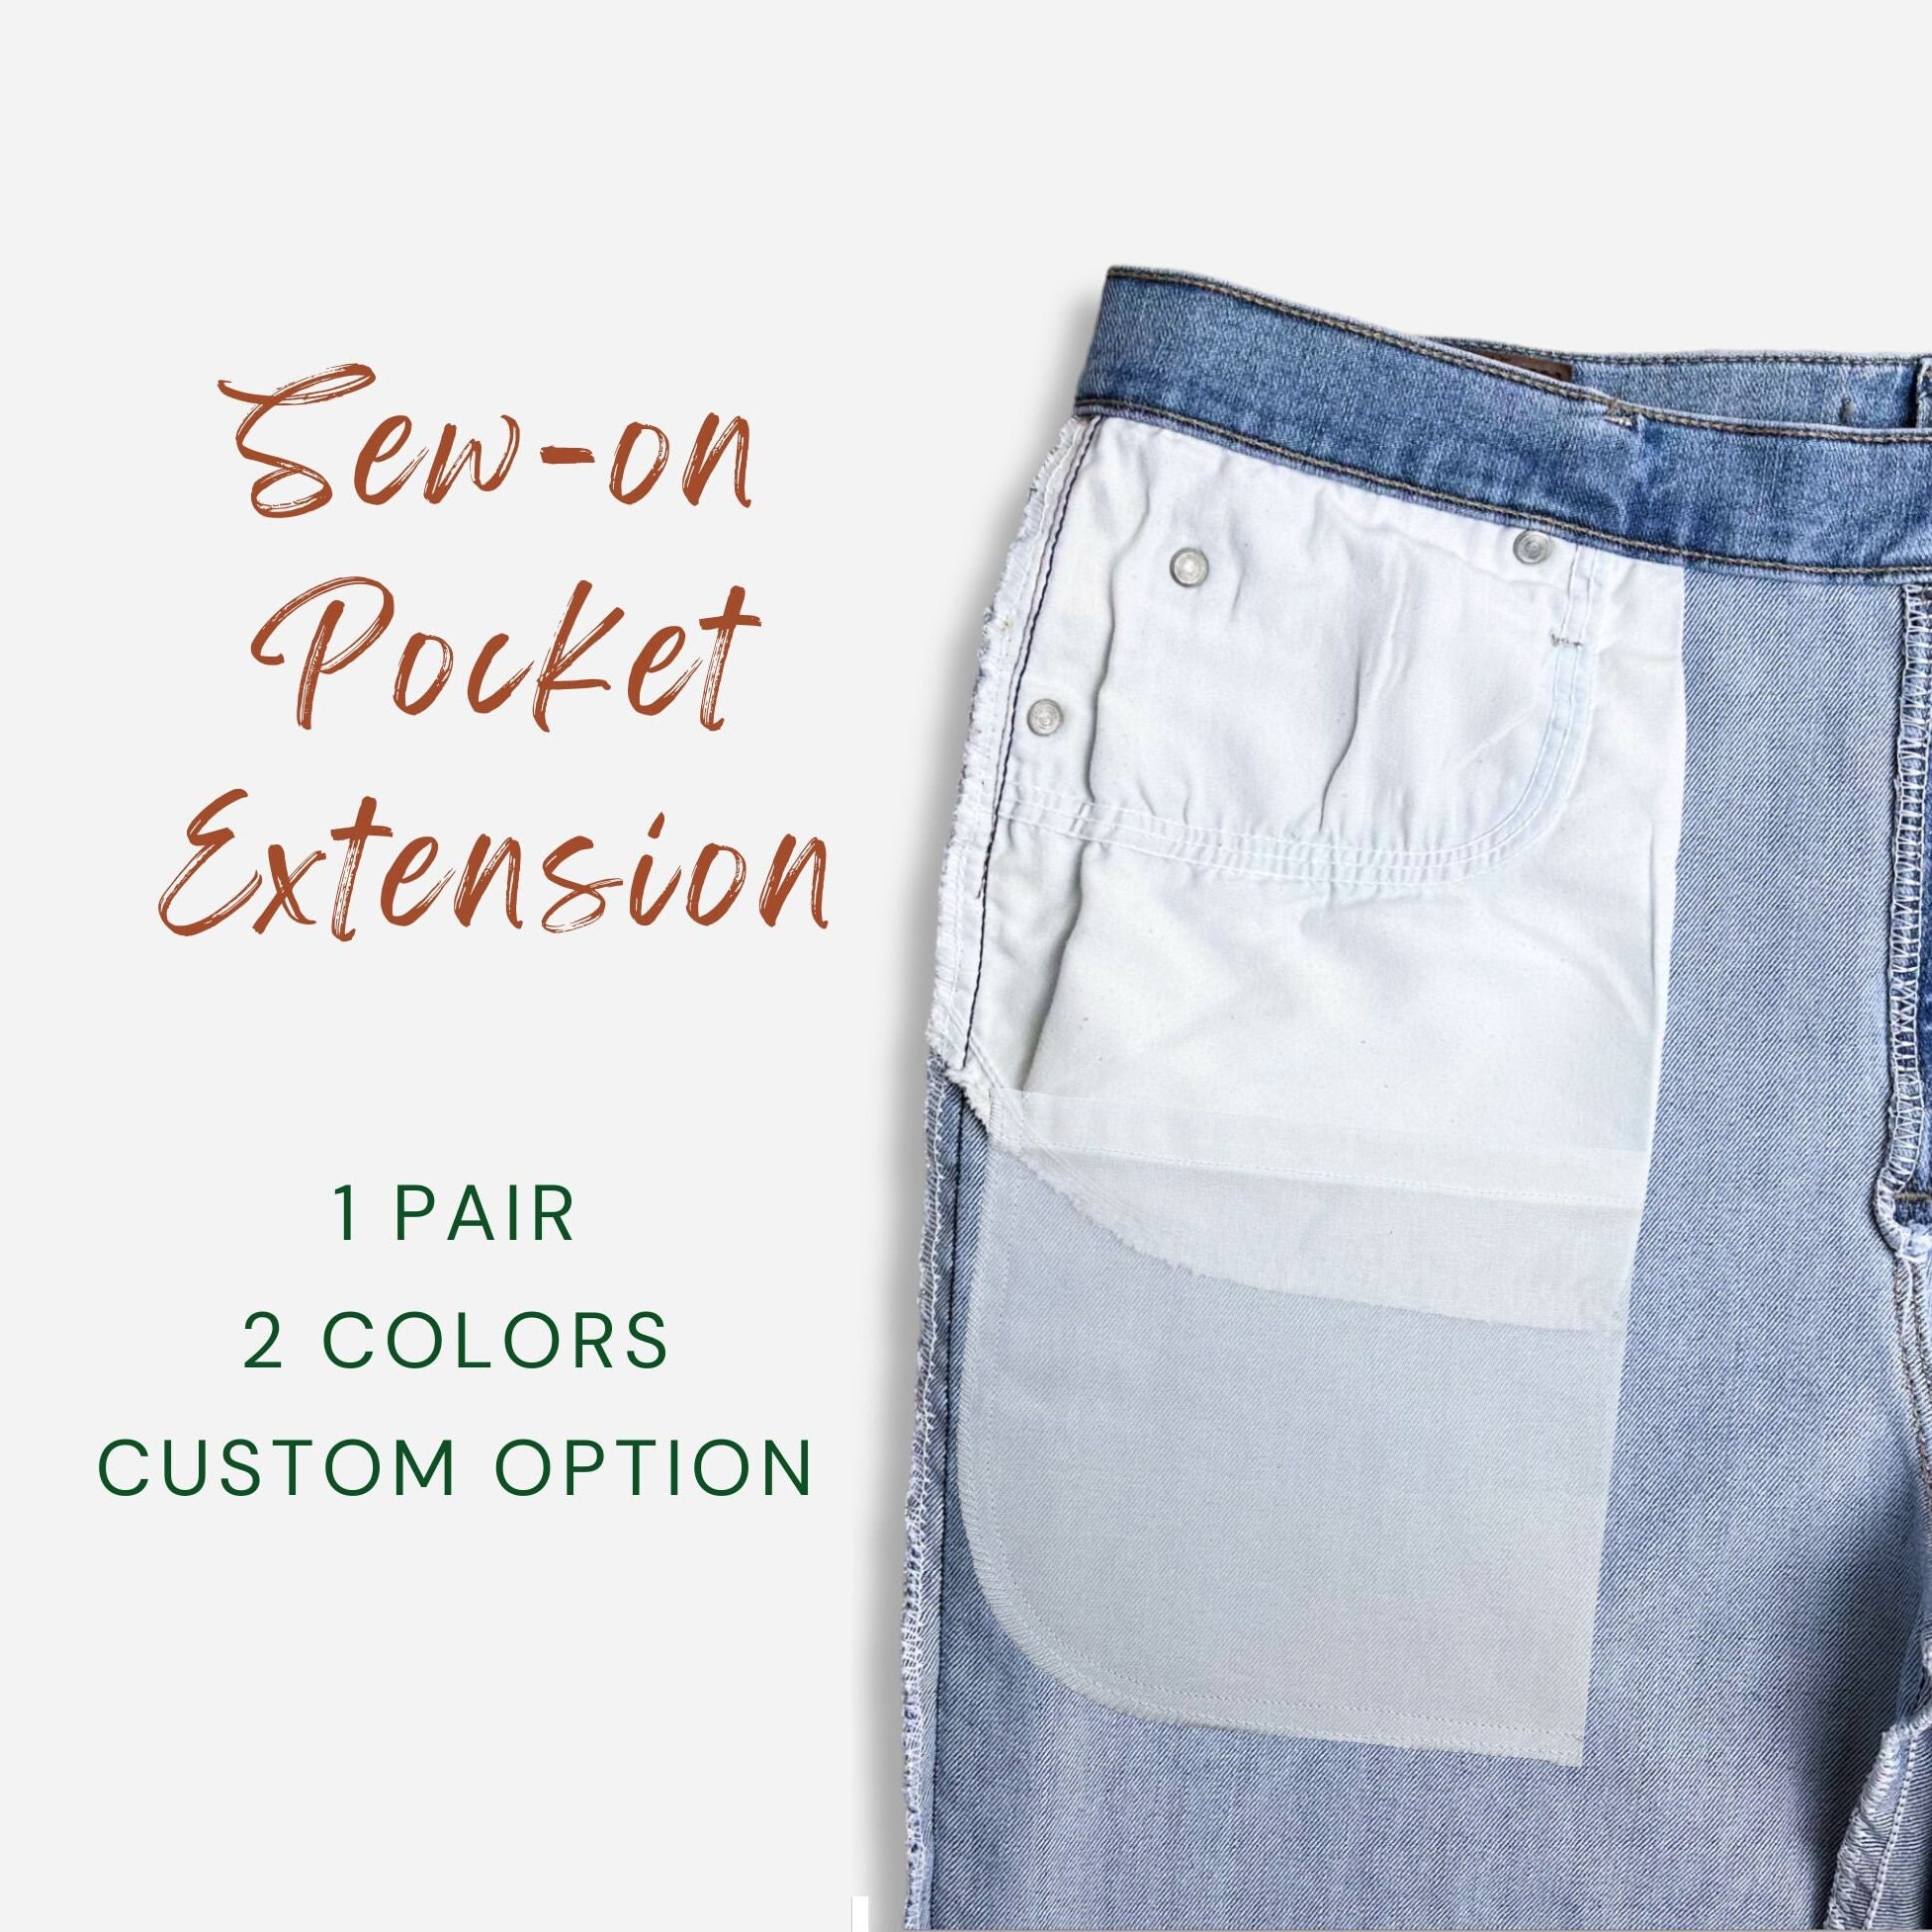 2-12pcs/pack Premium Denim Iron on Jean Patches No-sew Shades